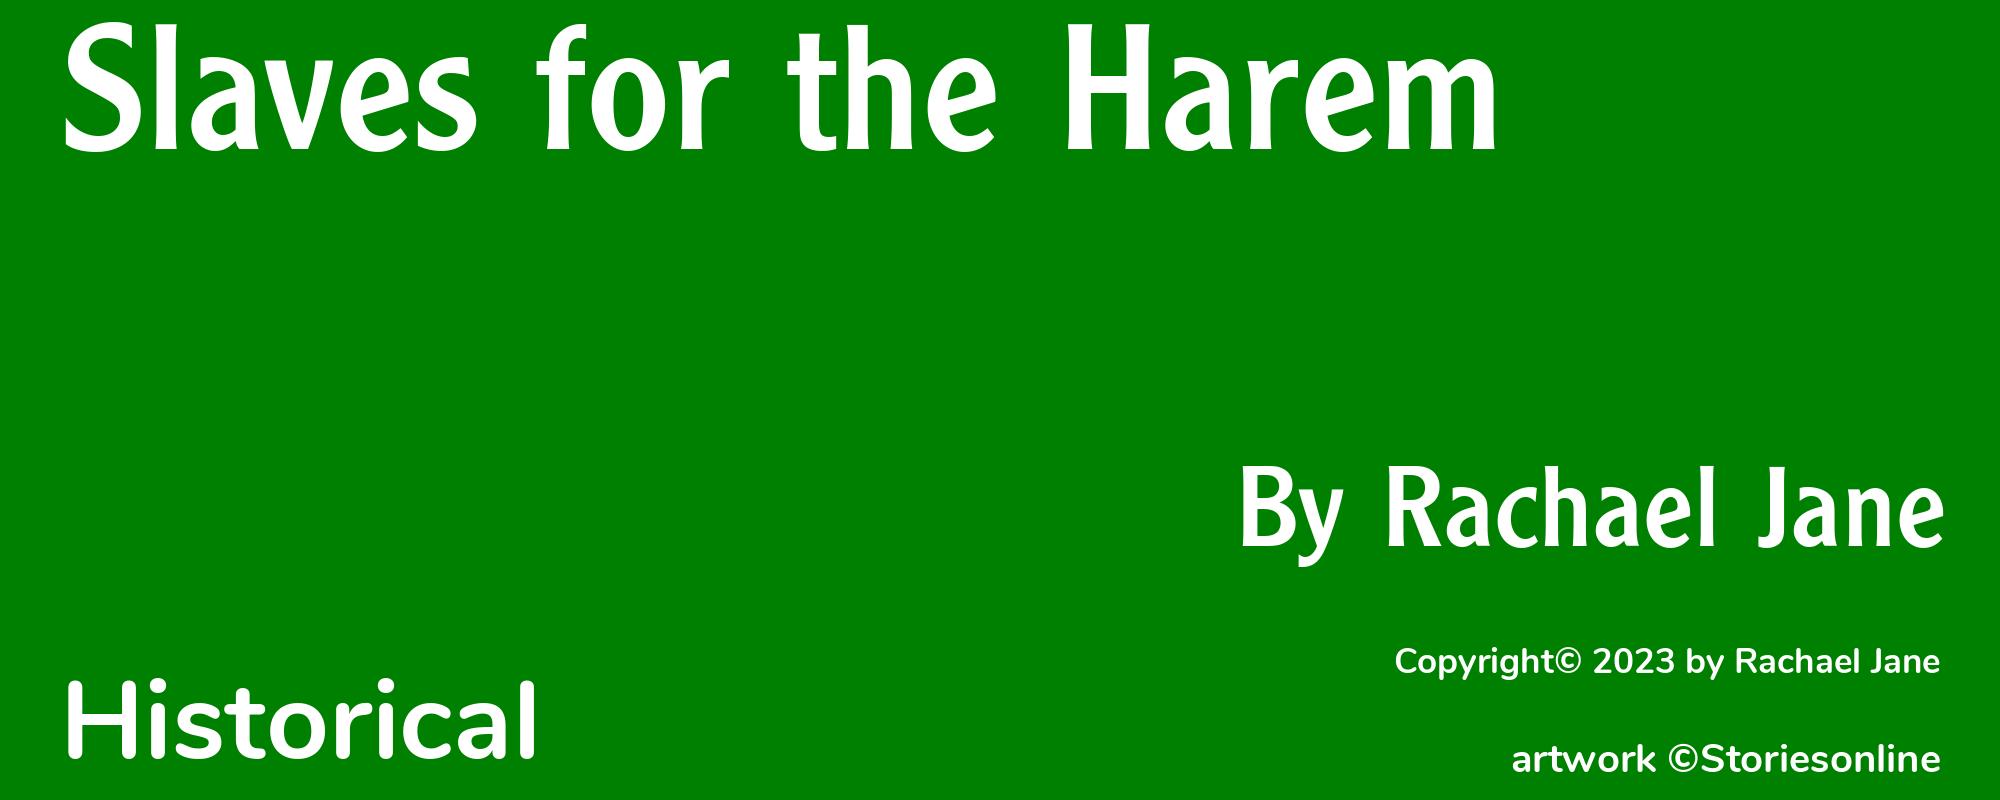 Slaves for the Harem - Cover